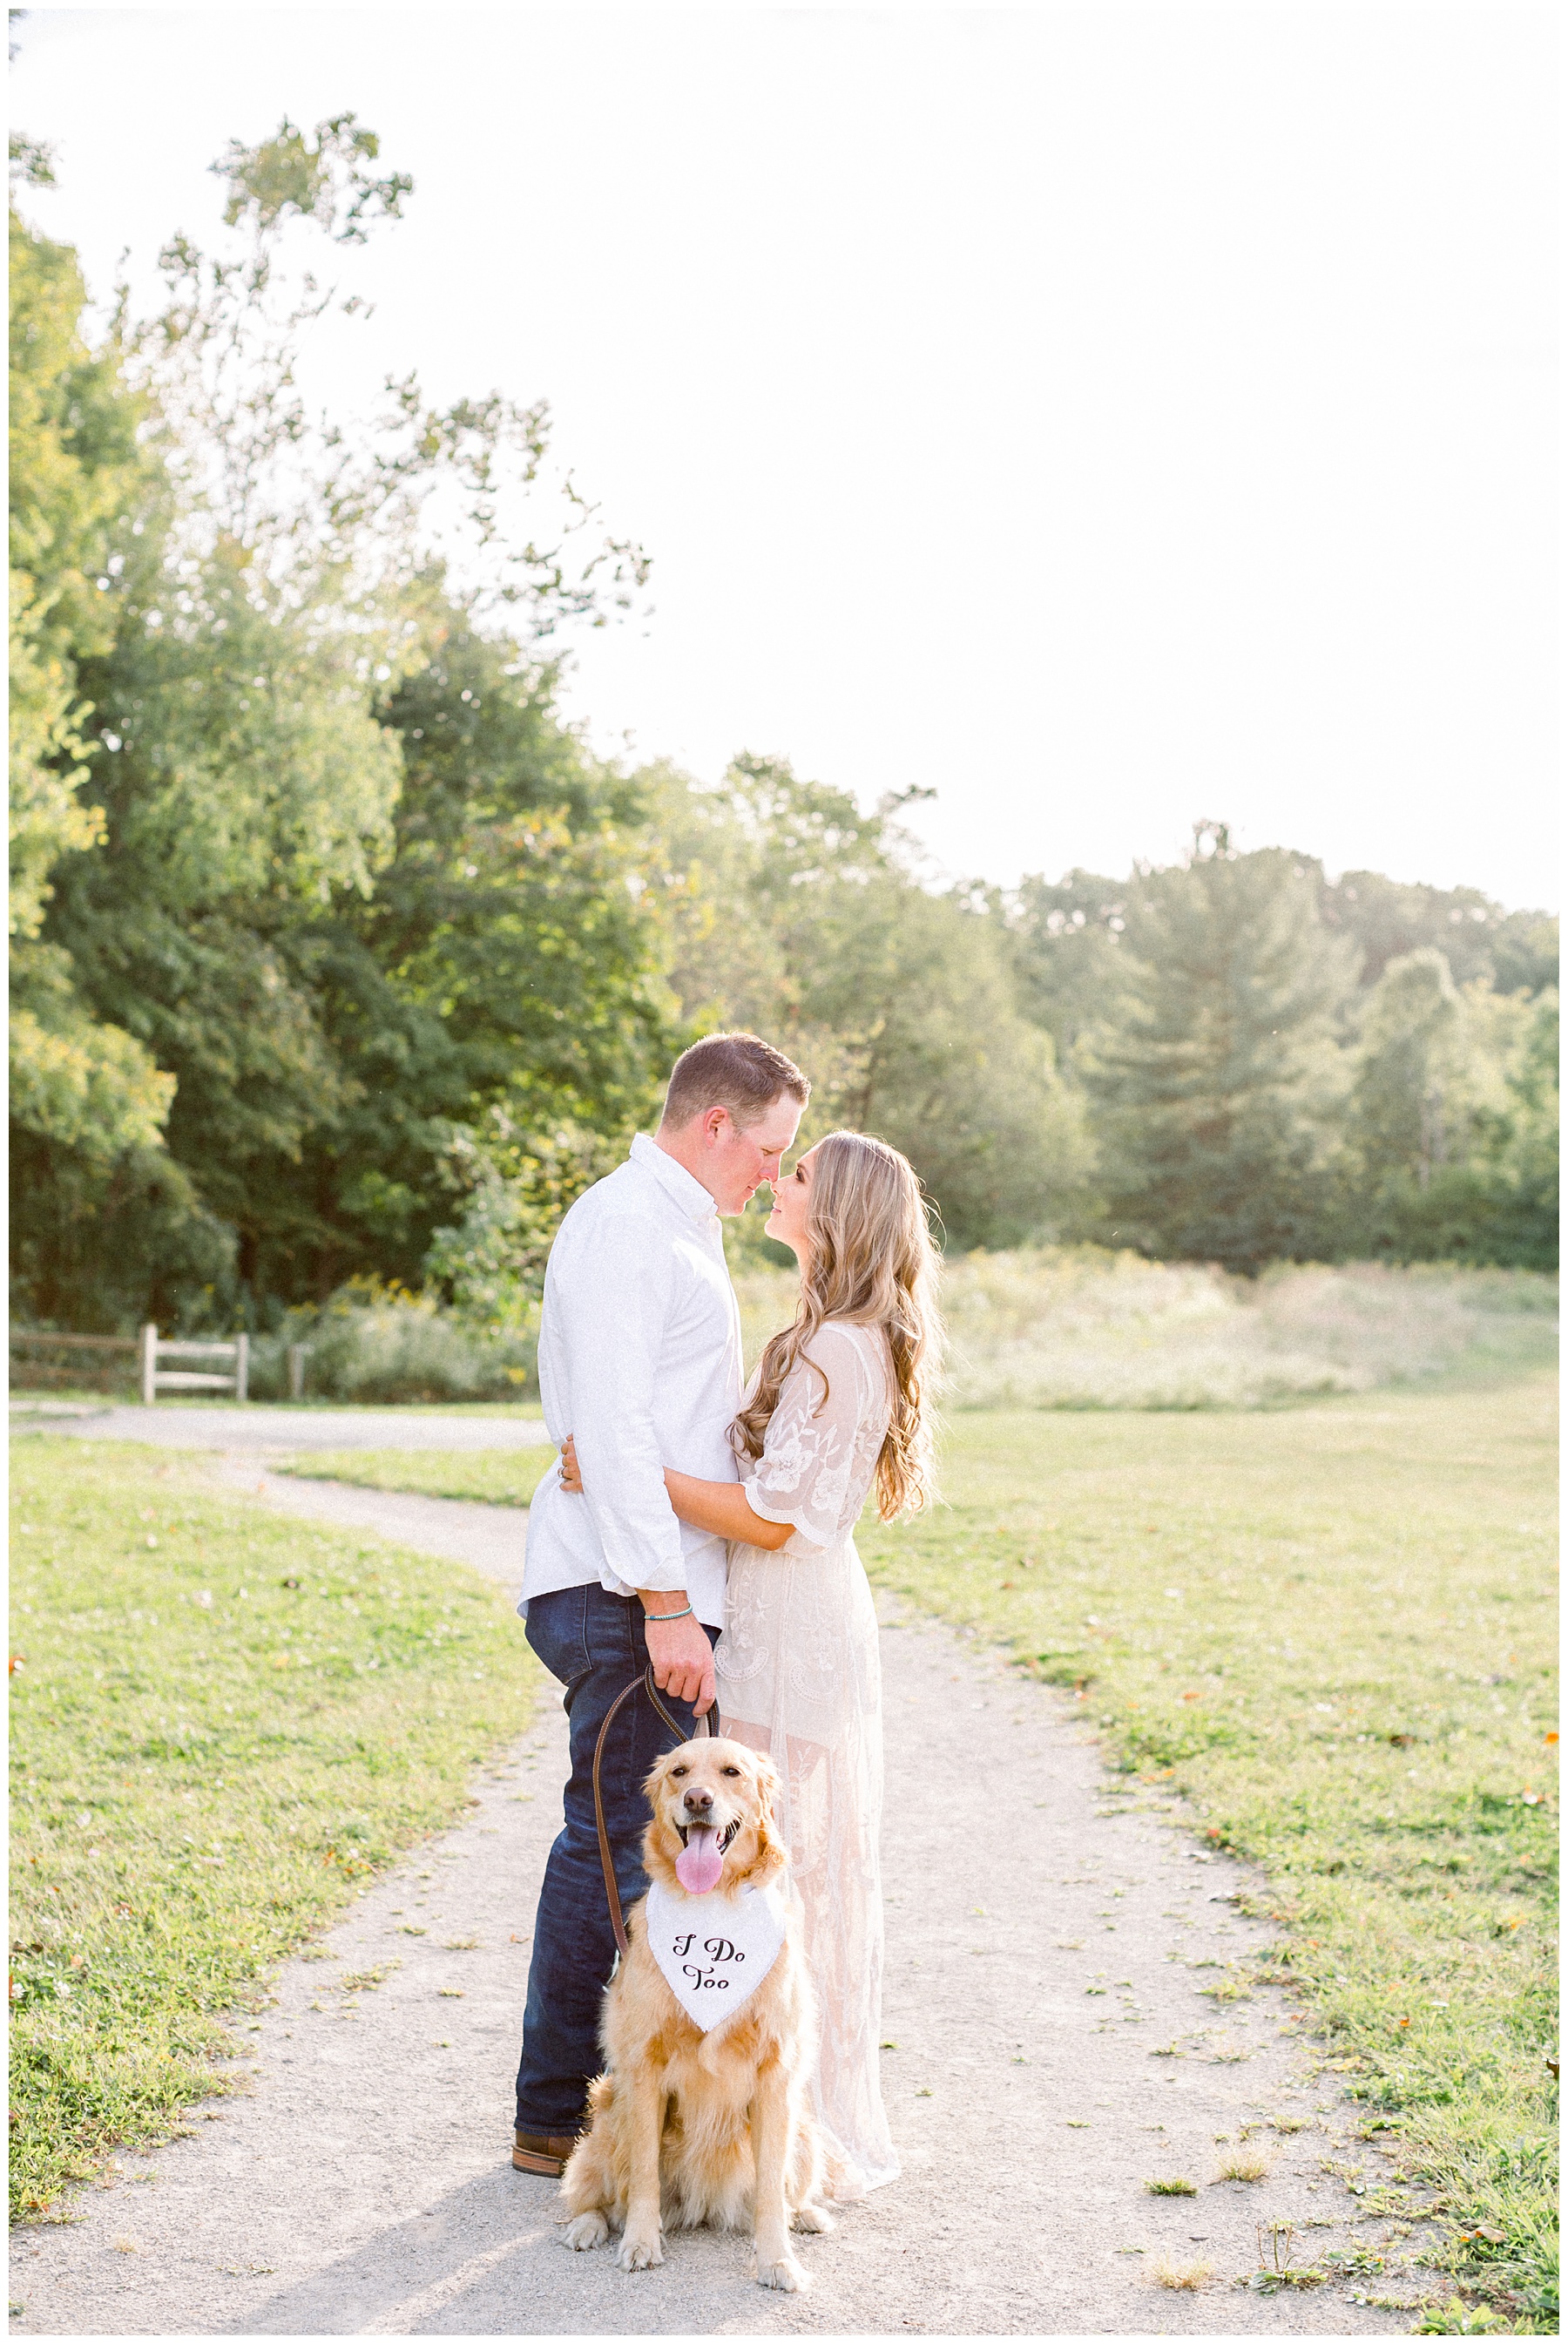 Hoover Reservoir Park Engagement Session by Amanda Eloise Photography. North Carolina Wedding Photographer